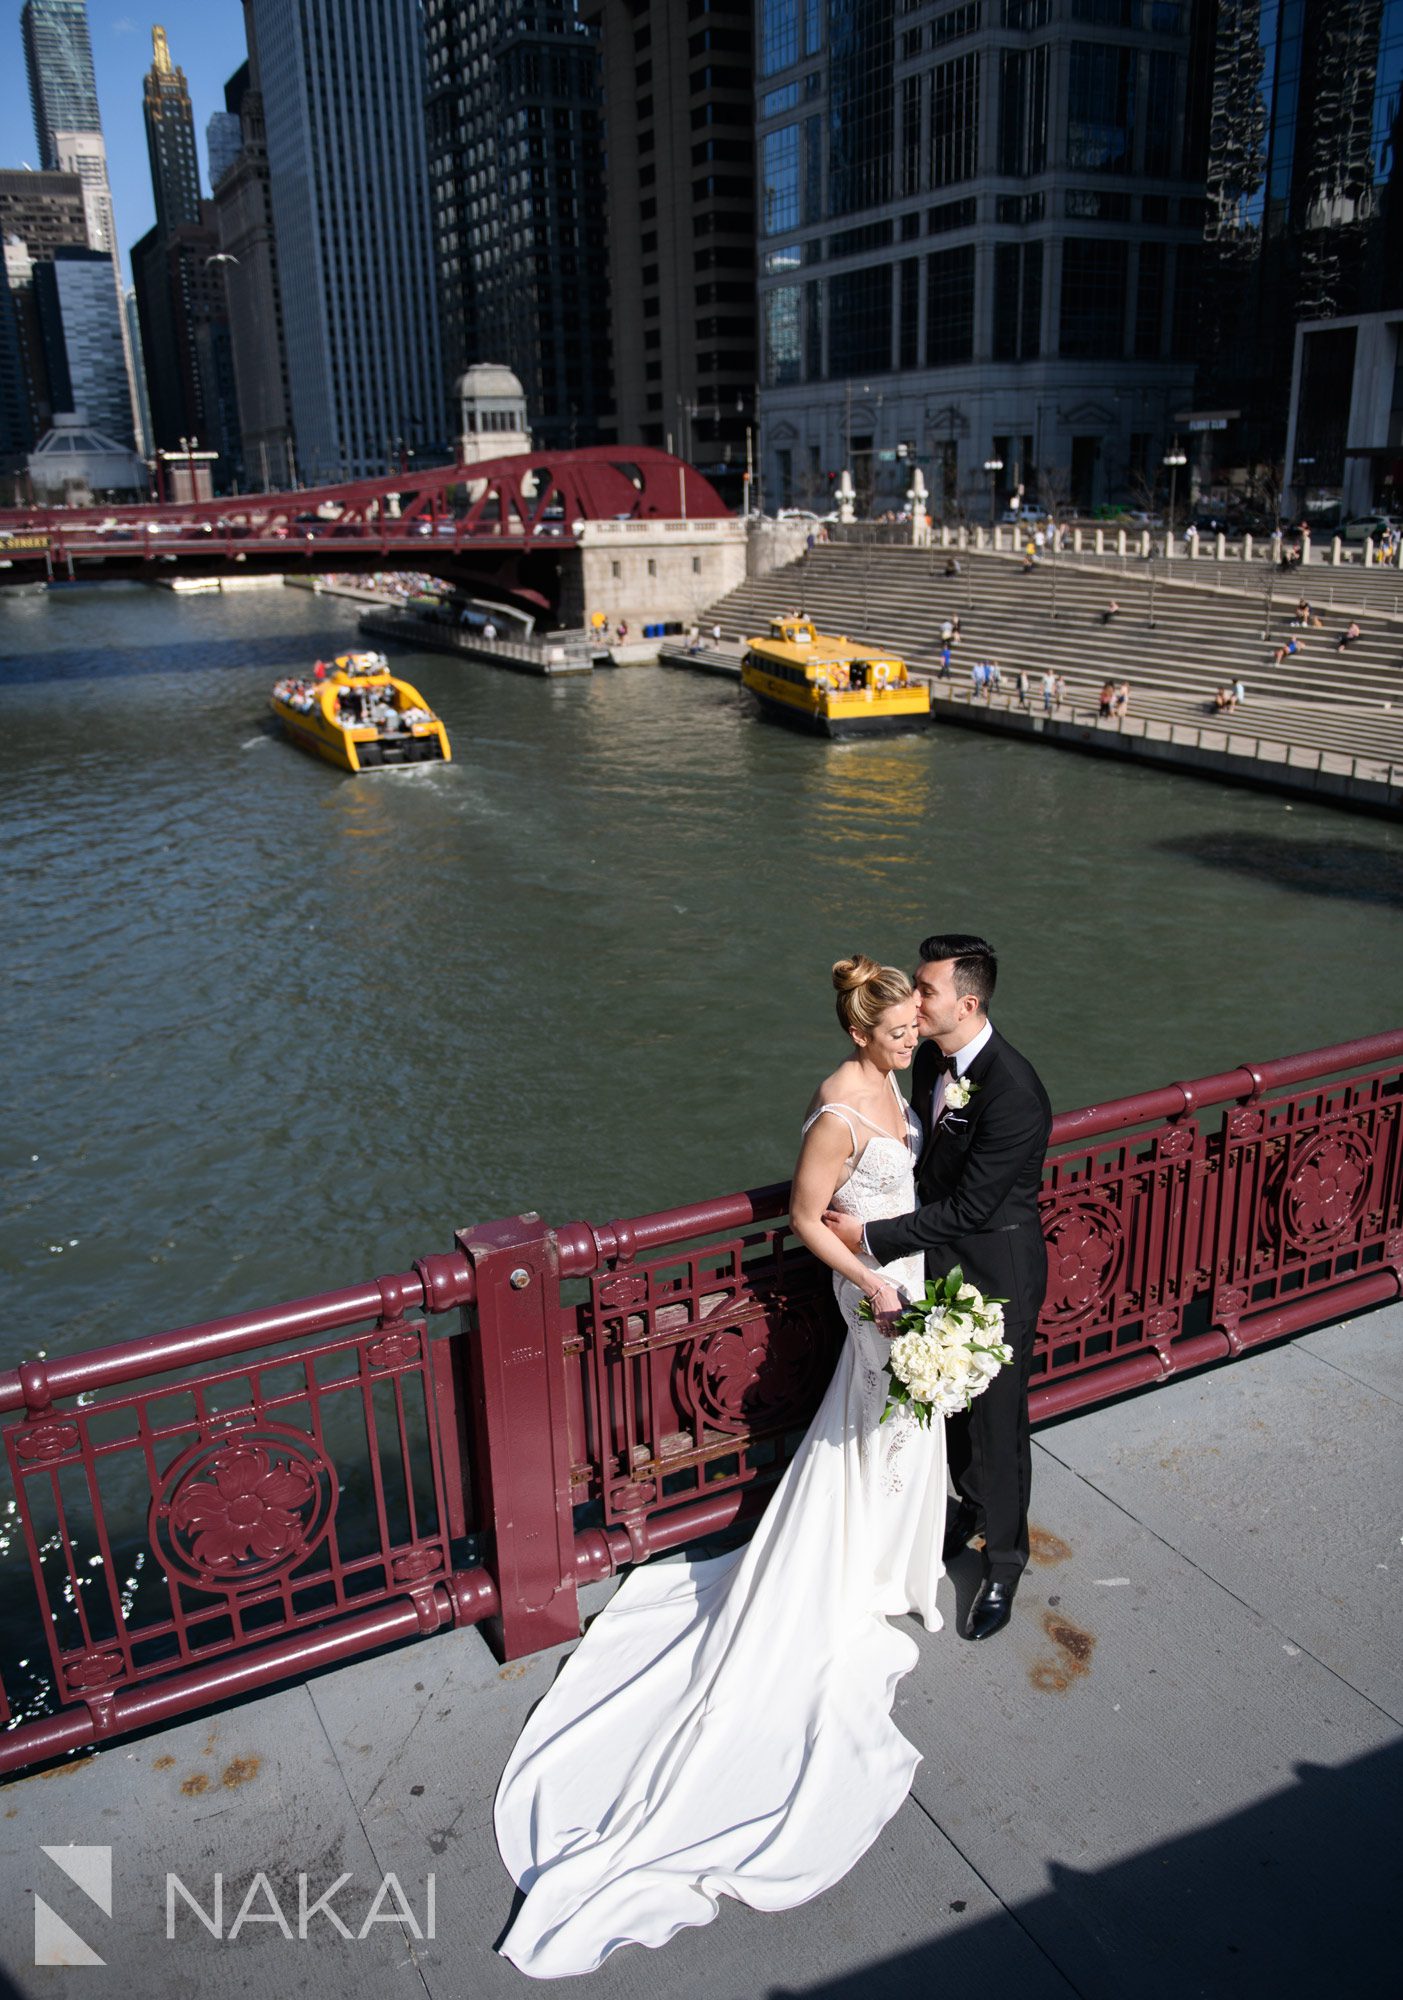 Lasalle st wedding picture Chicago bridge bride groom